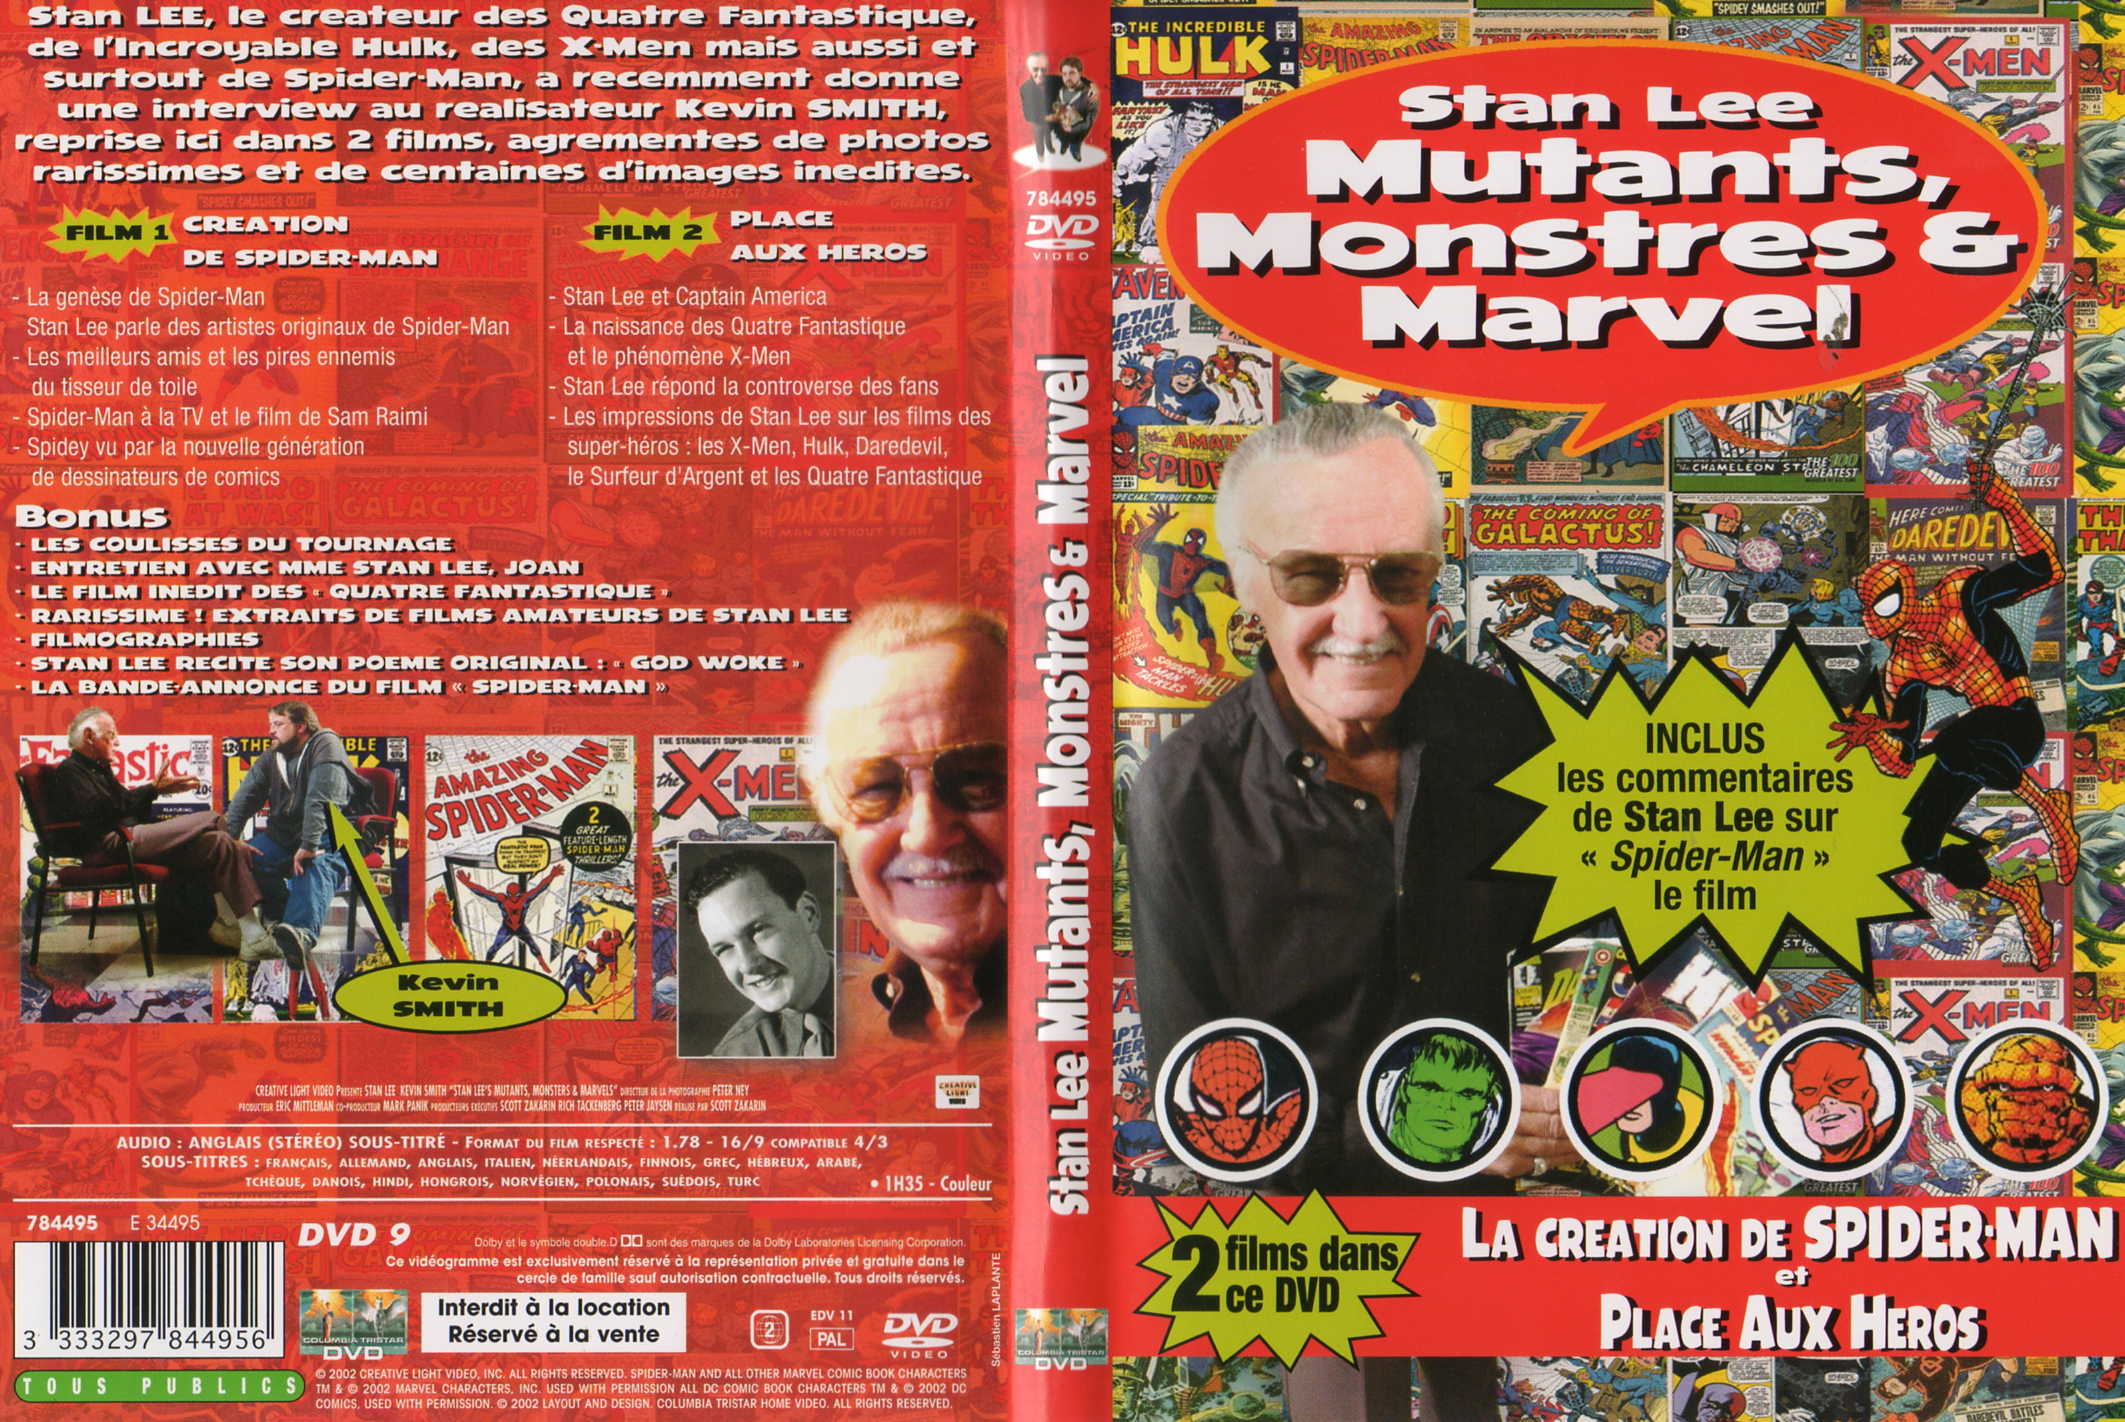 Jaquette DVD Stan Lee - Mutants, monstres et Marvel